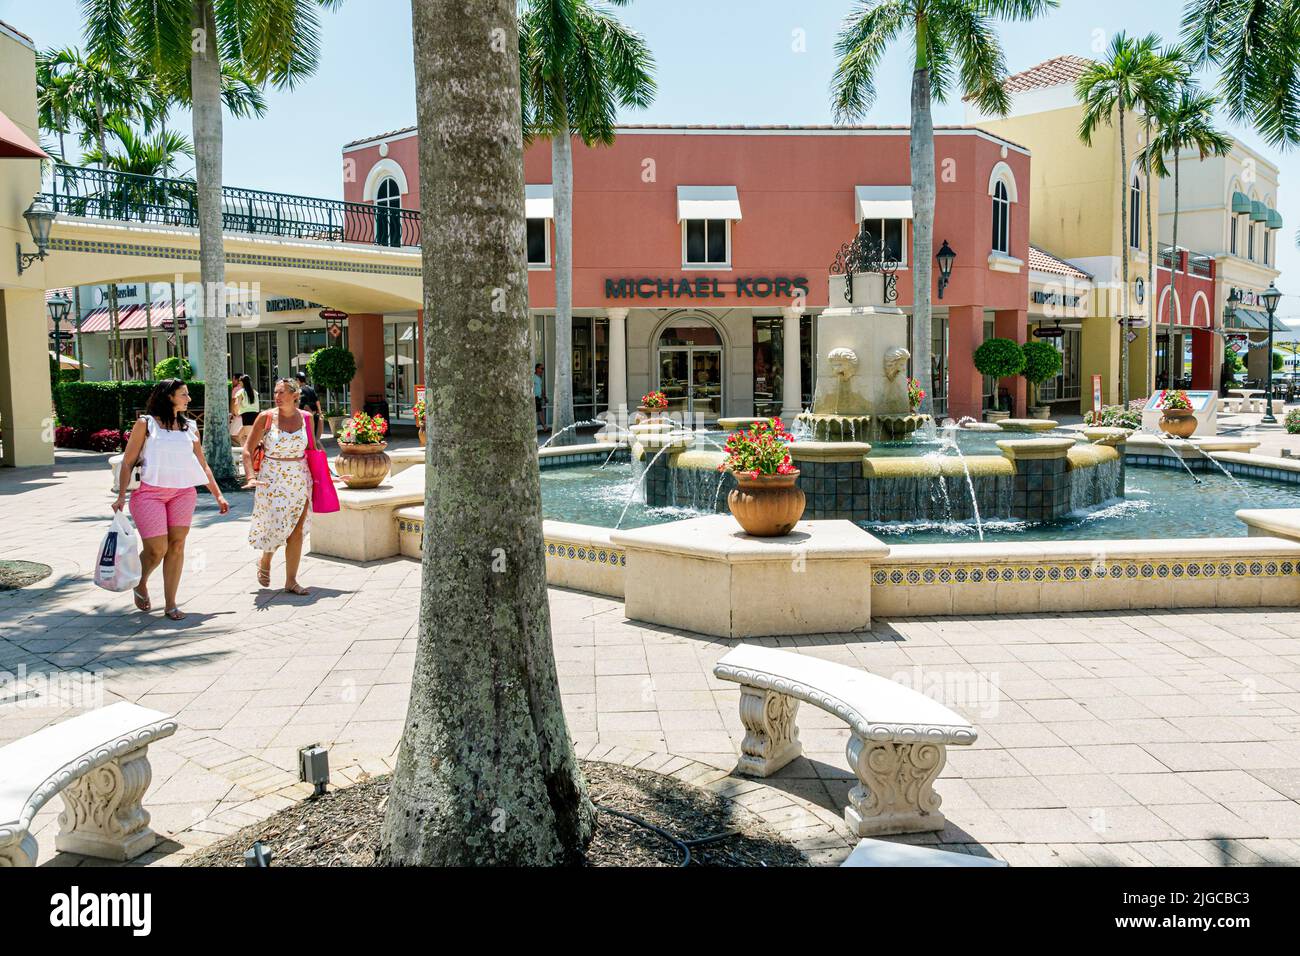 Estero Florida,Miromar Outlet factory outlets designer name brand shopping mall fountain Michael Kors women adults Stock Photo